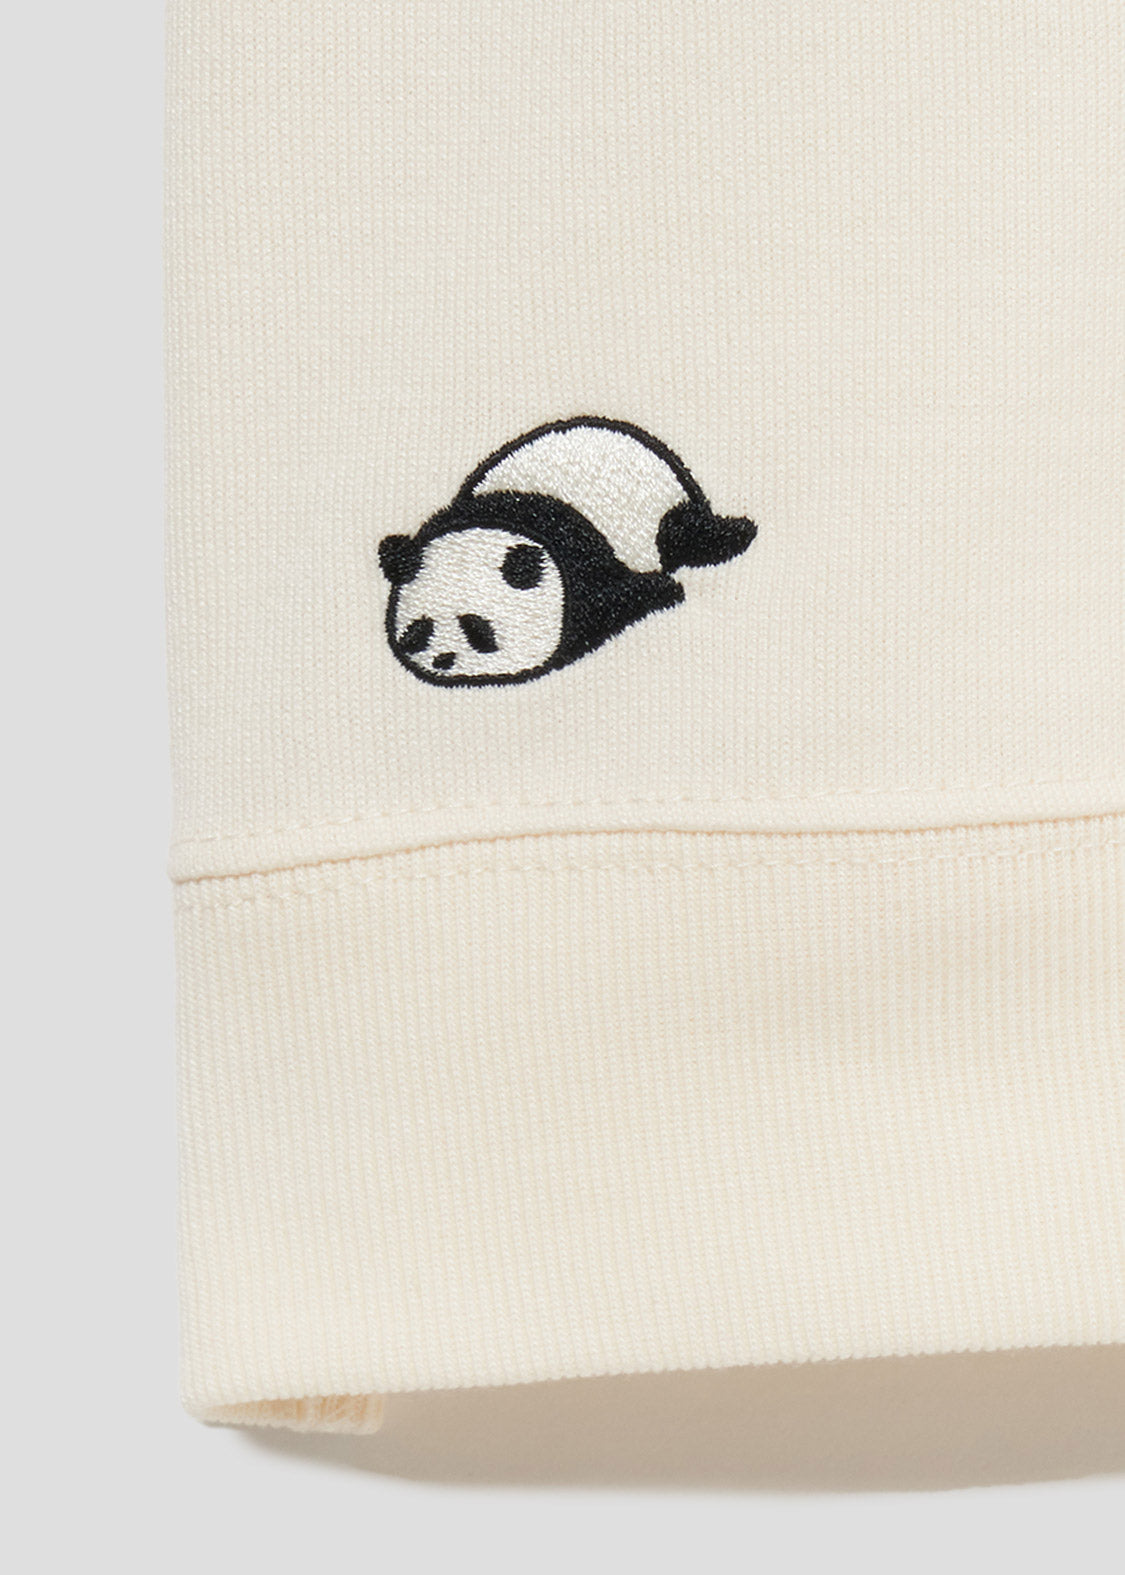 Heavy Weight Half Sleeve Tee (Rolling Pandas Logo)